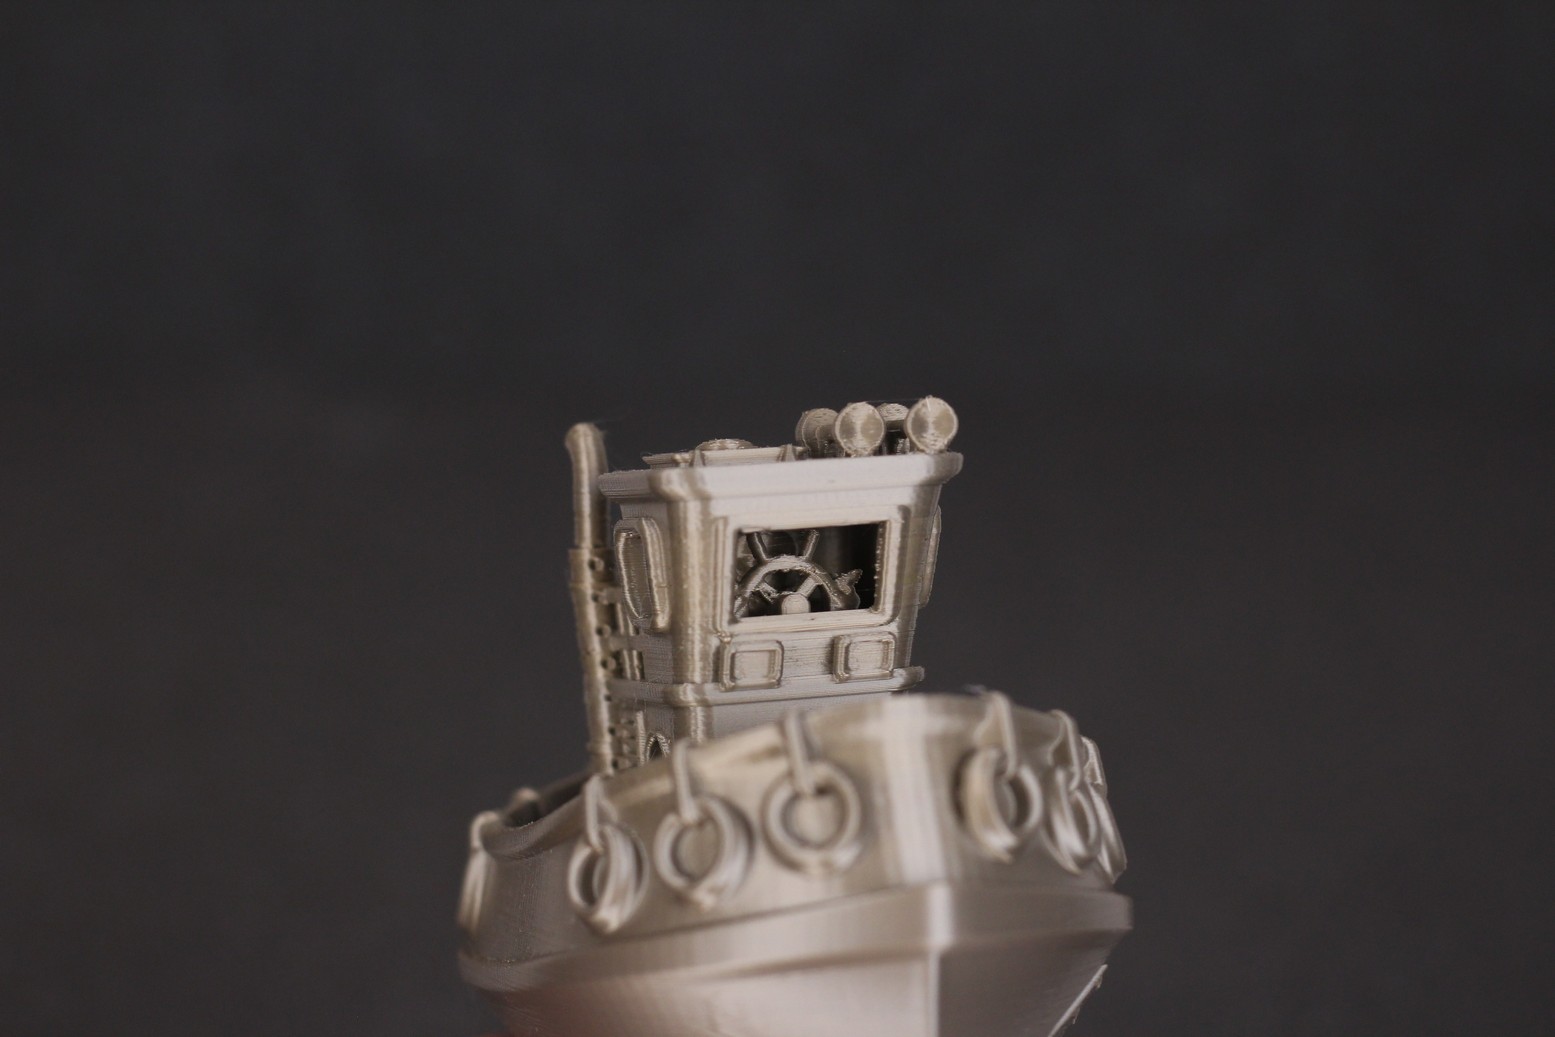 Ship printed on CR 200B 6 | Creality CR-200B Review: Budget Enclosed 3D Printer